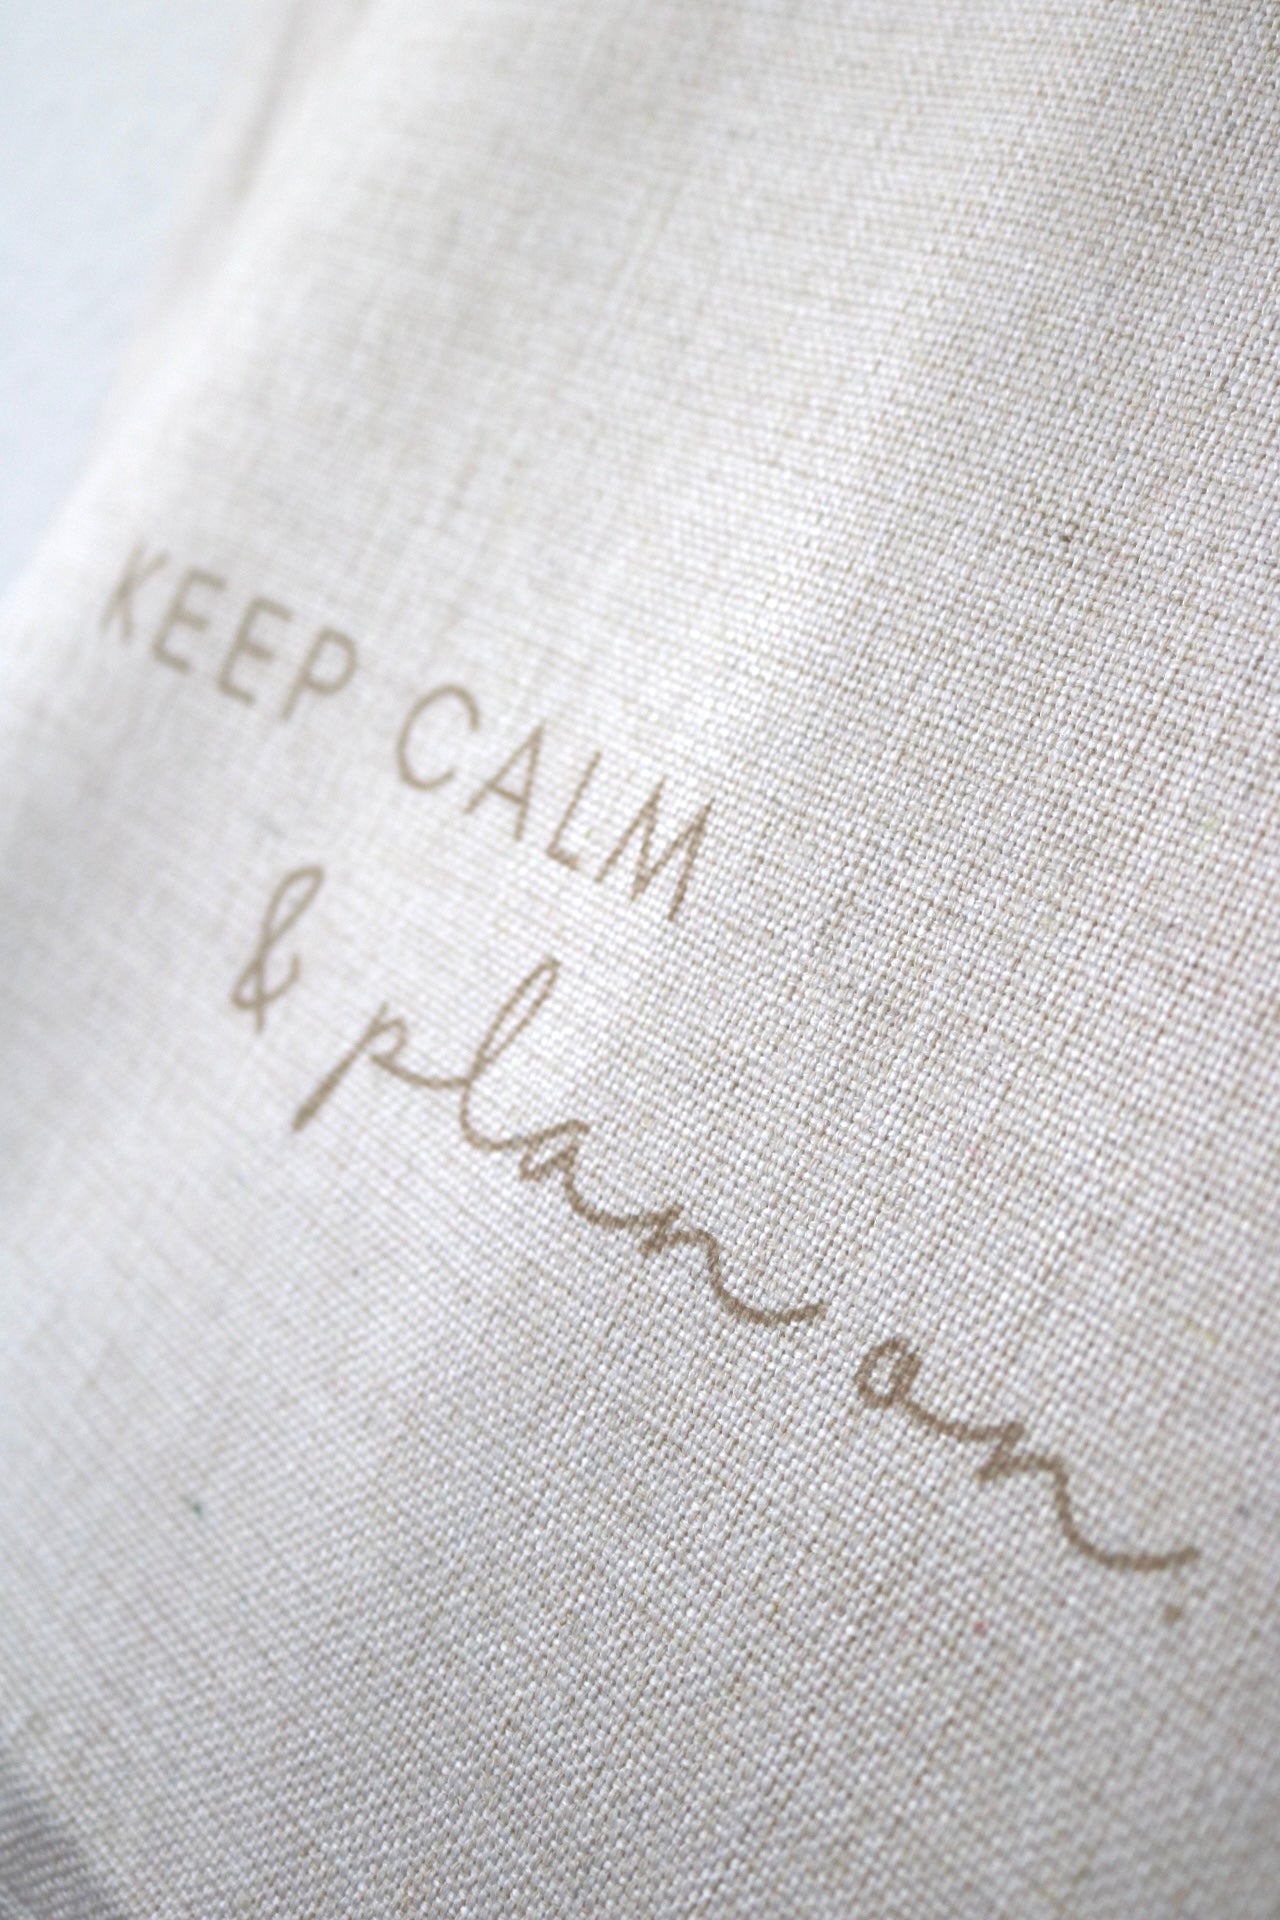 Tote Bag • Keep calm & plan on • Poly Canvas